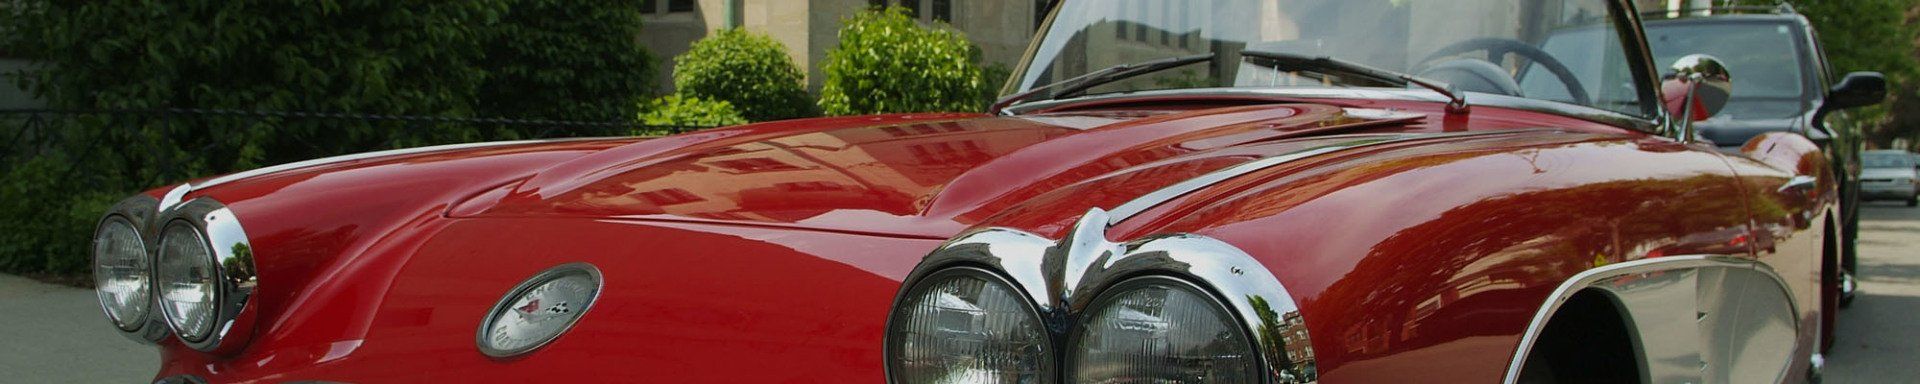 Close up shot of a vintage red car